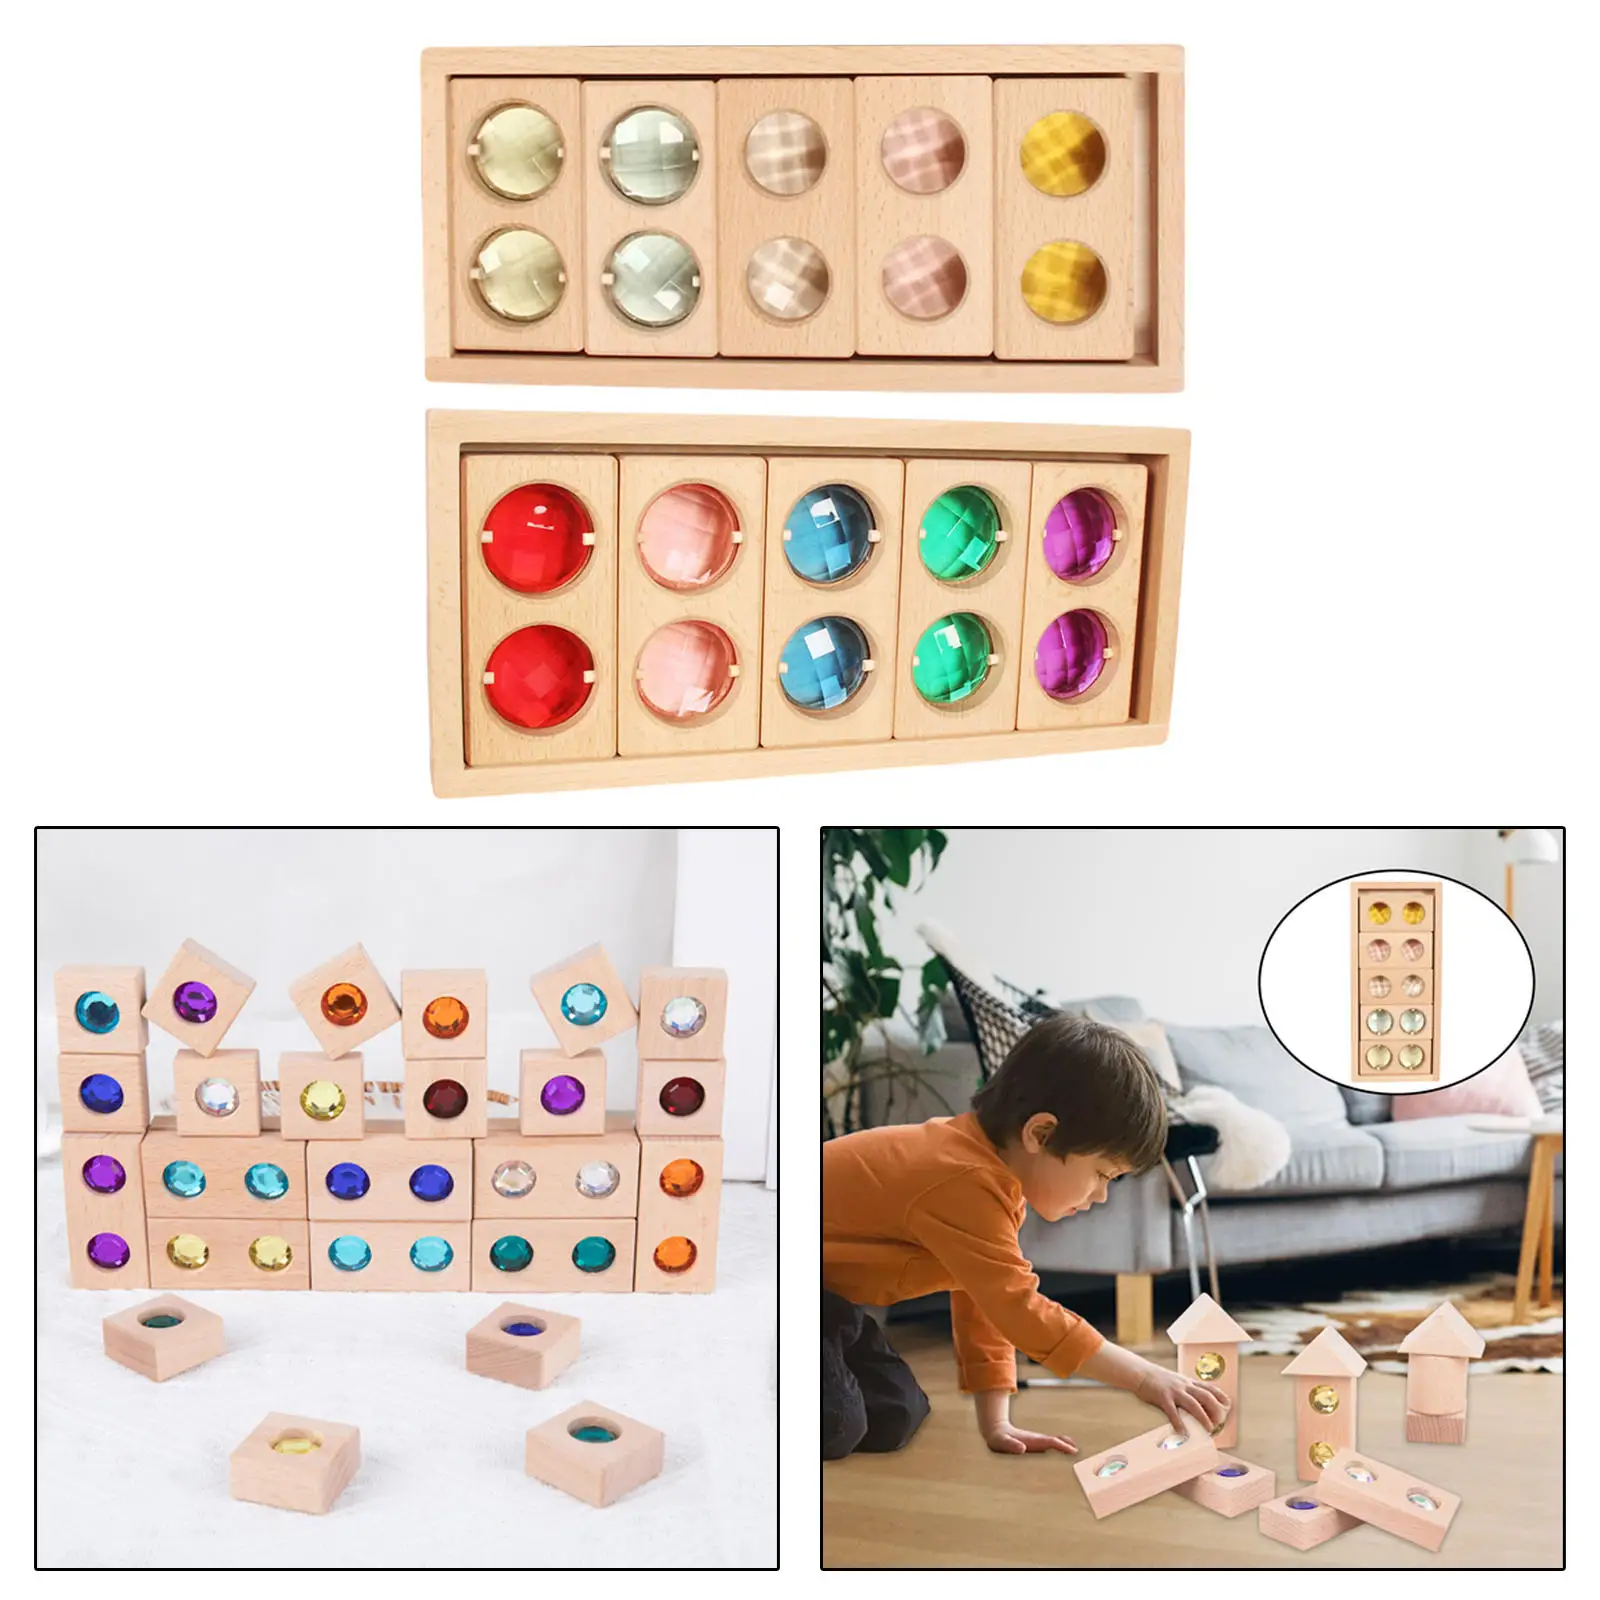 Wooden Toy Translucent Building Blocks Set Rainbow Gemstone Blocks for Preschool Toddlers